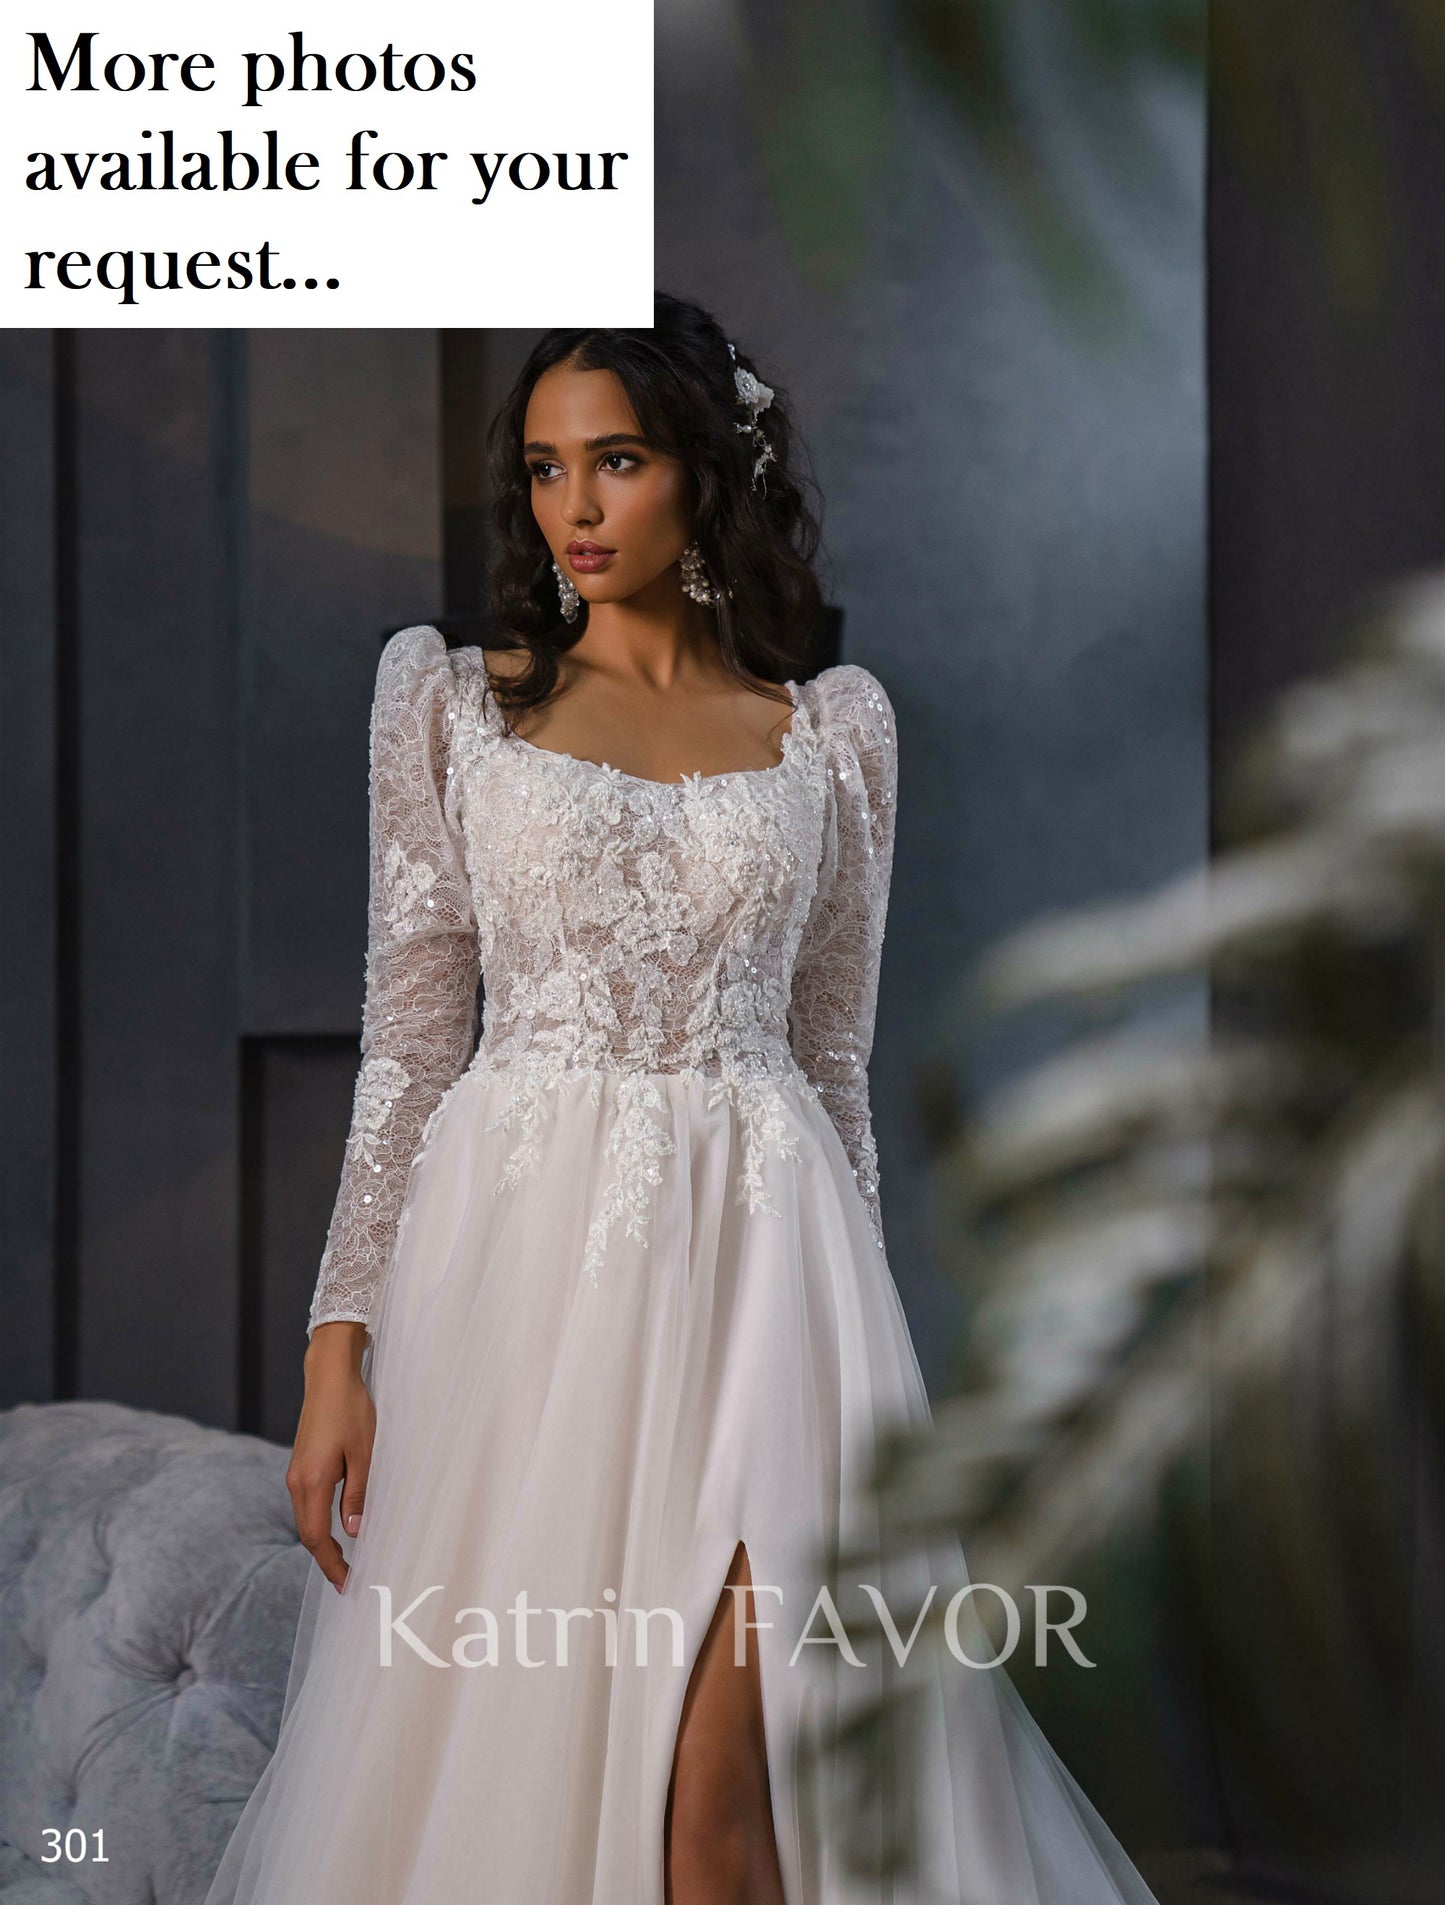 Fairy wedding dress long sleeve